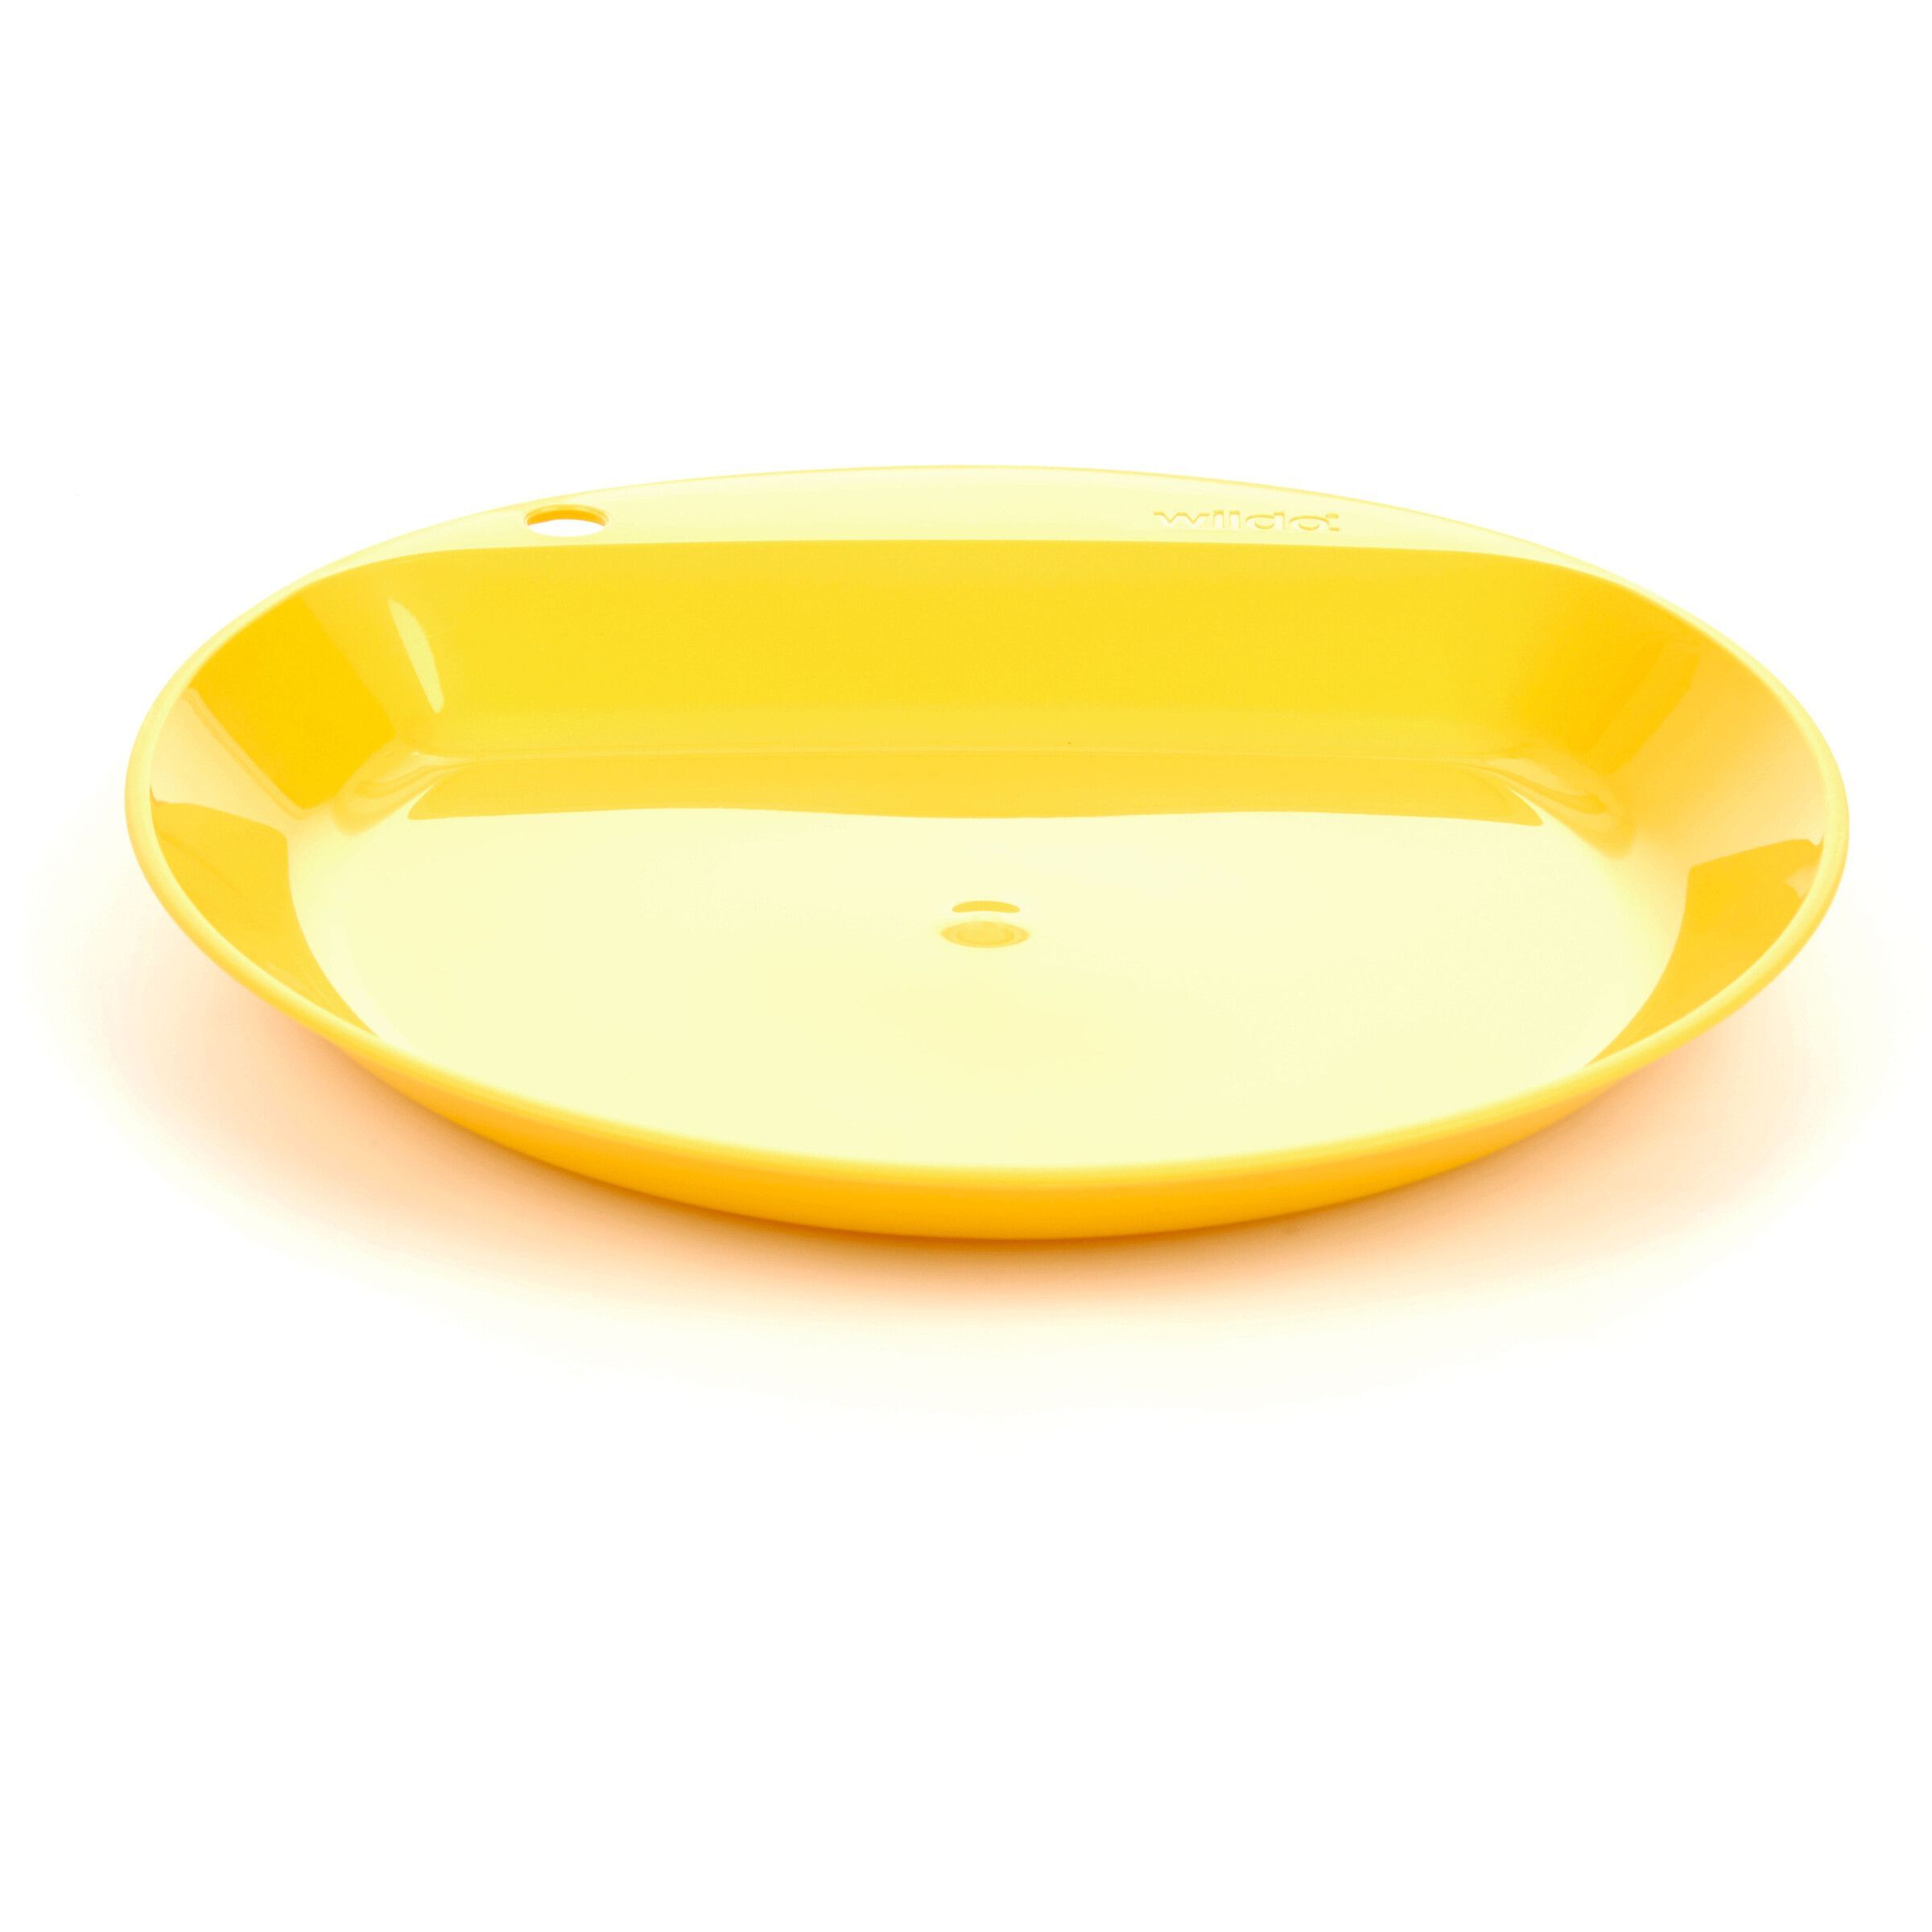 Тарелка Wildo Camper Plate Flat,. Желтая пластиковая тарелка. Желтая тарелка. Тарелка желтая алюминий. Flat plate